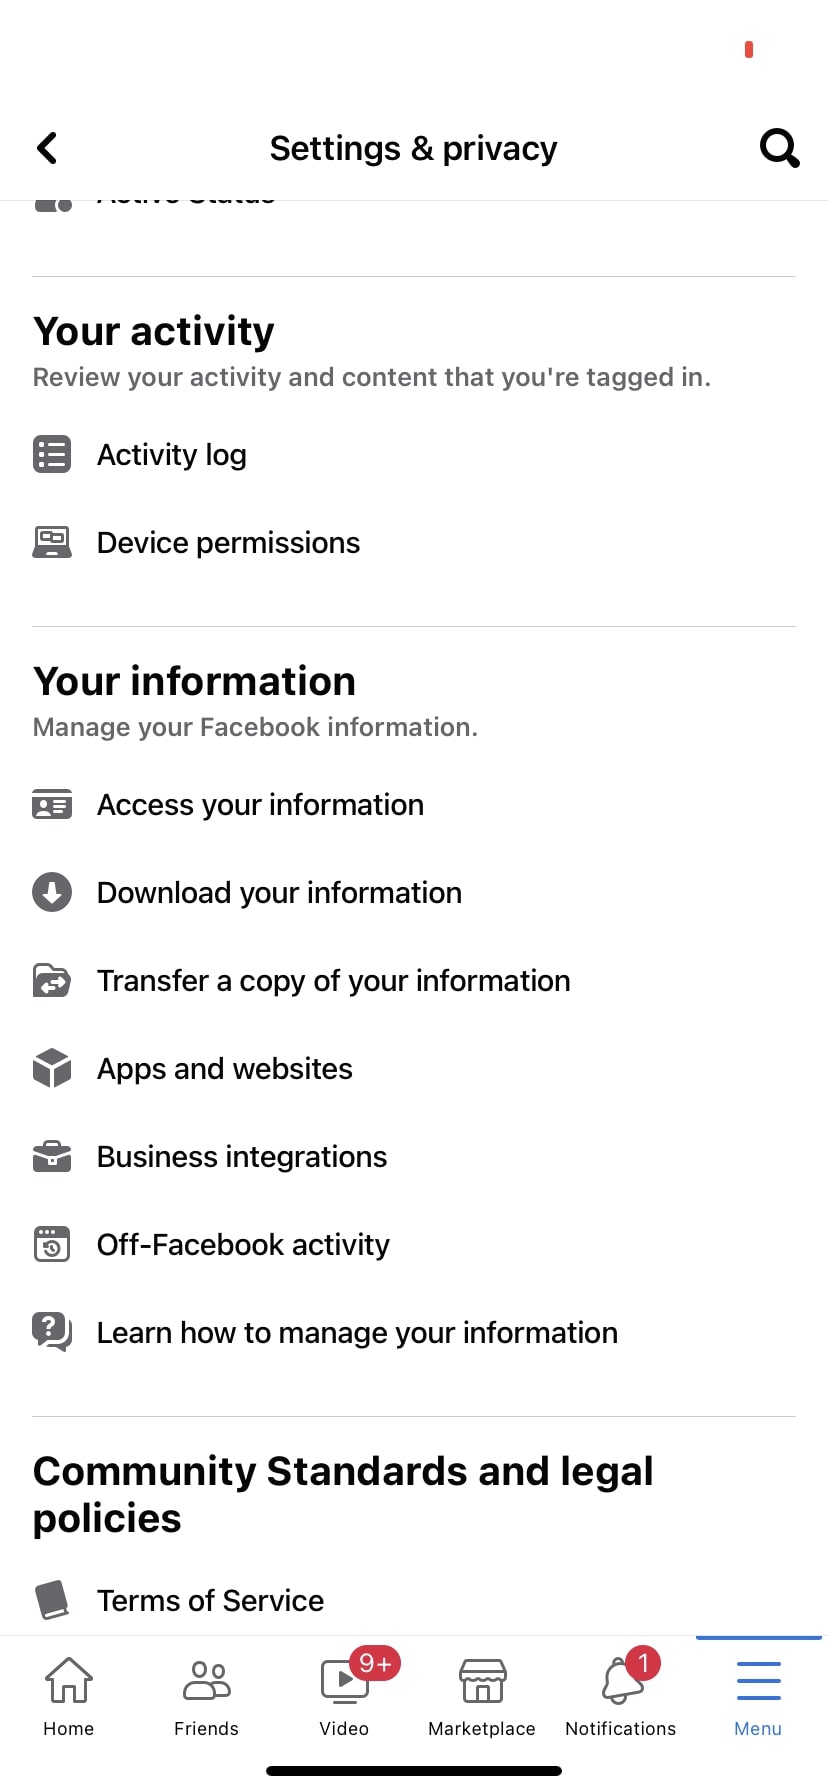 Facebook Download your information option